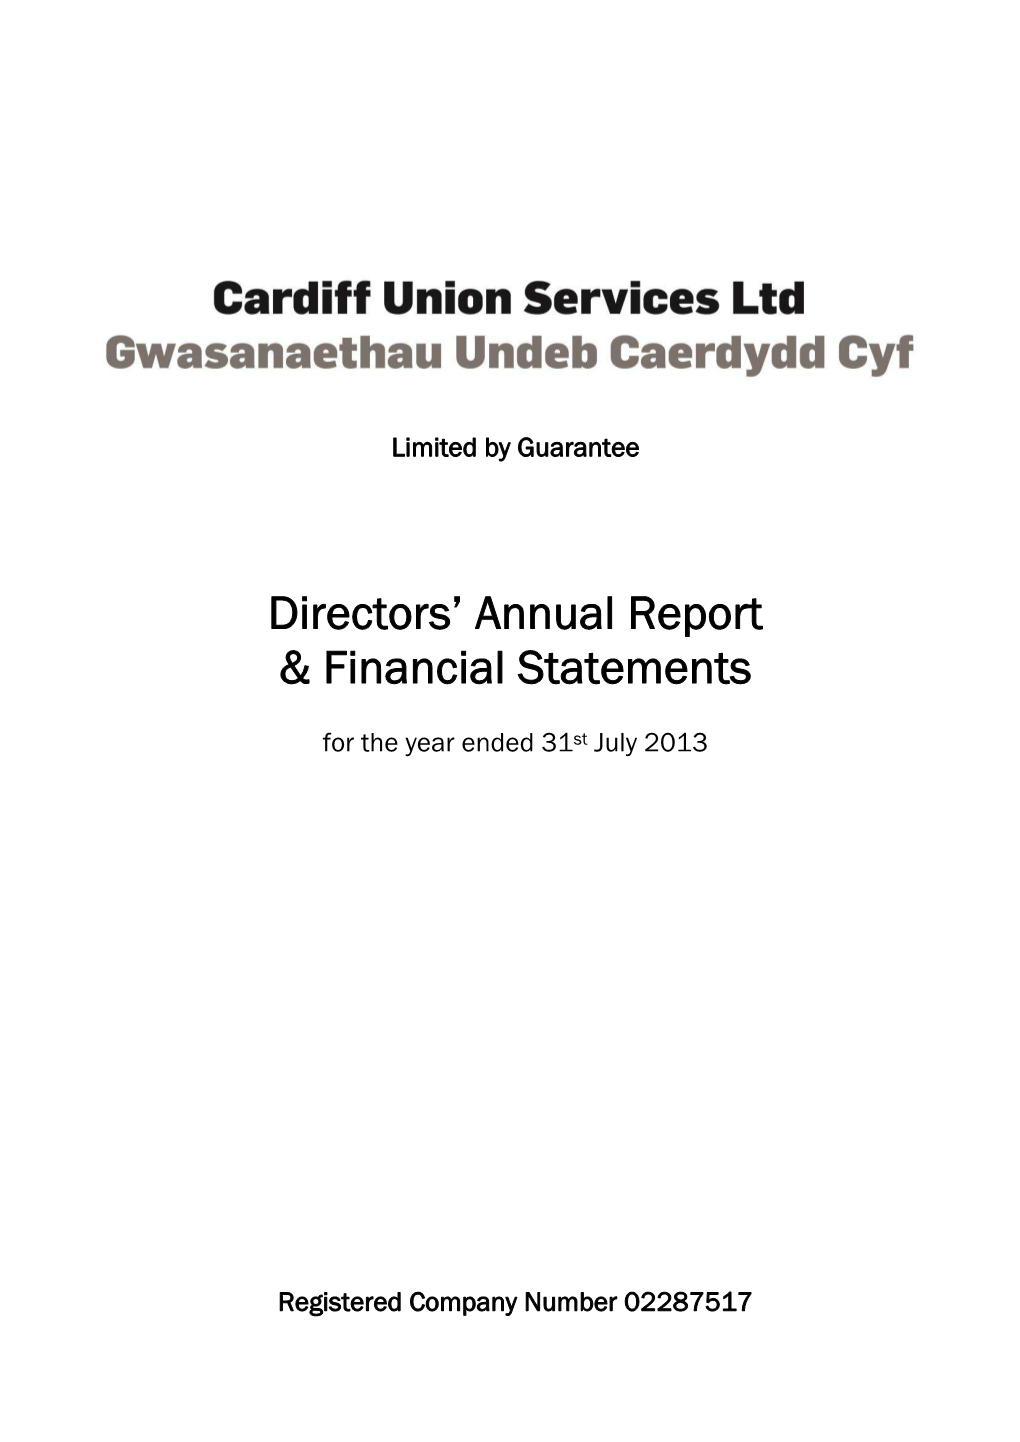 Directors' Annual Report & Financial Statements